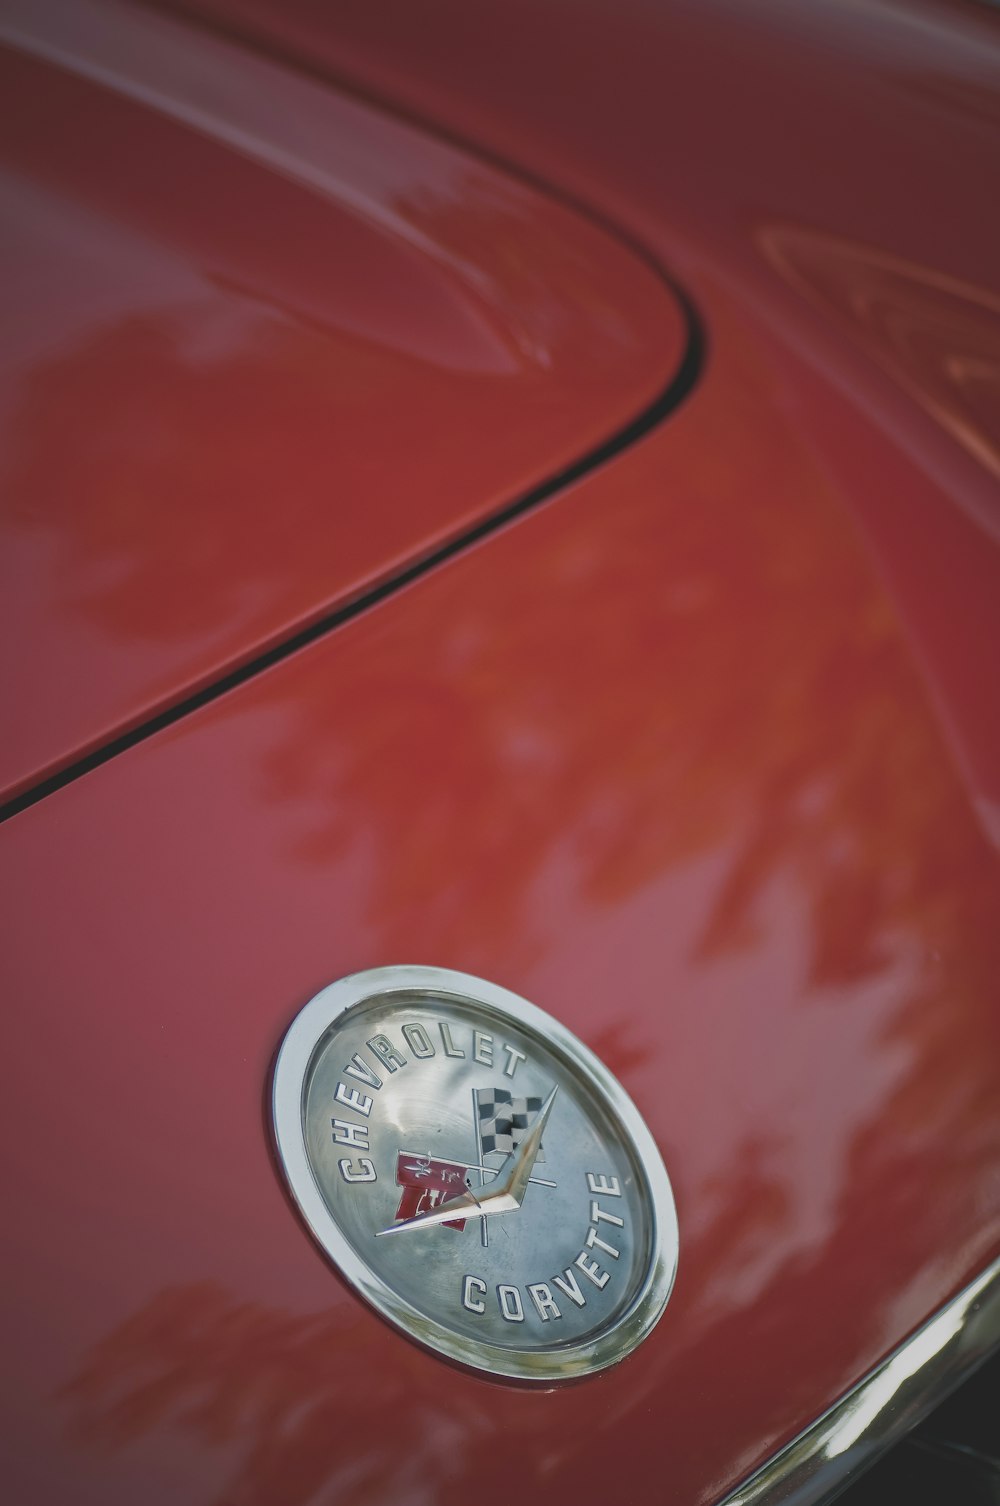 Chevrolet Corvette emblem